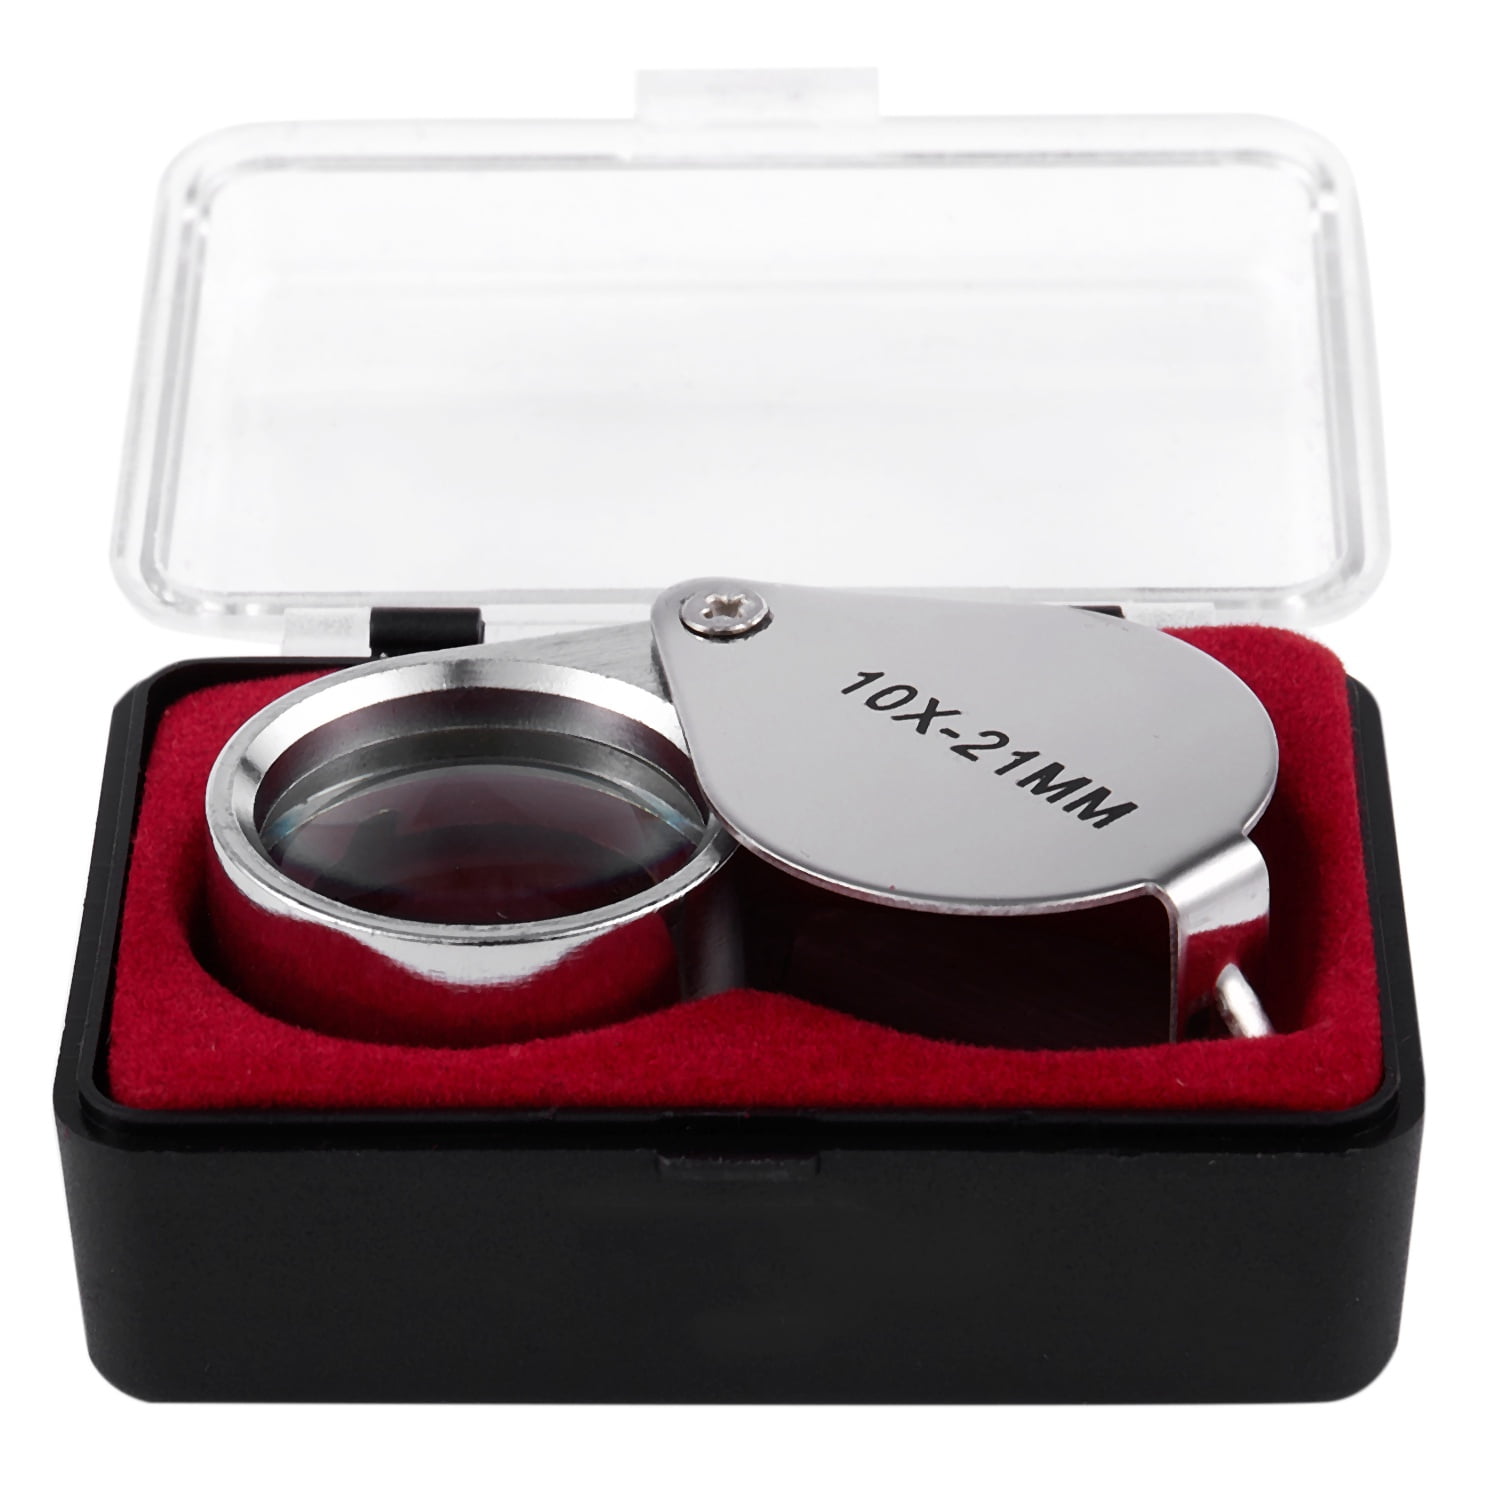 Jewellers Jewelry Loupe Magnifier Eye Magnifying Glass 10x 21mm S6U6 